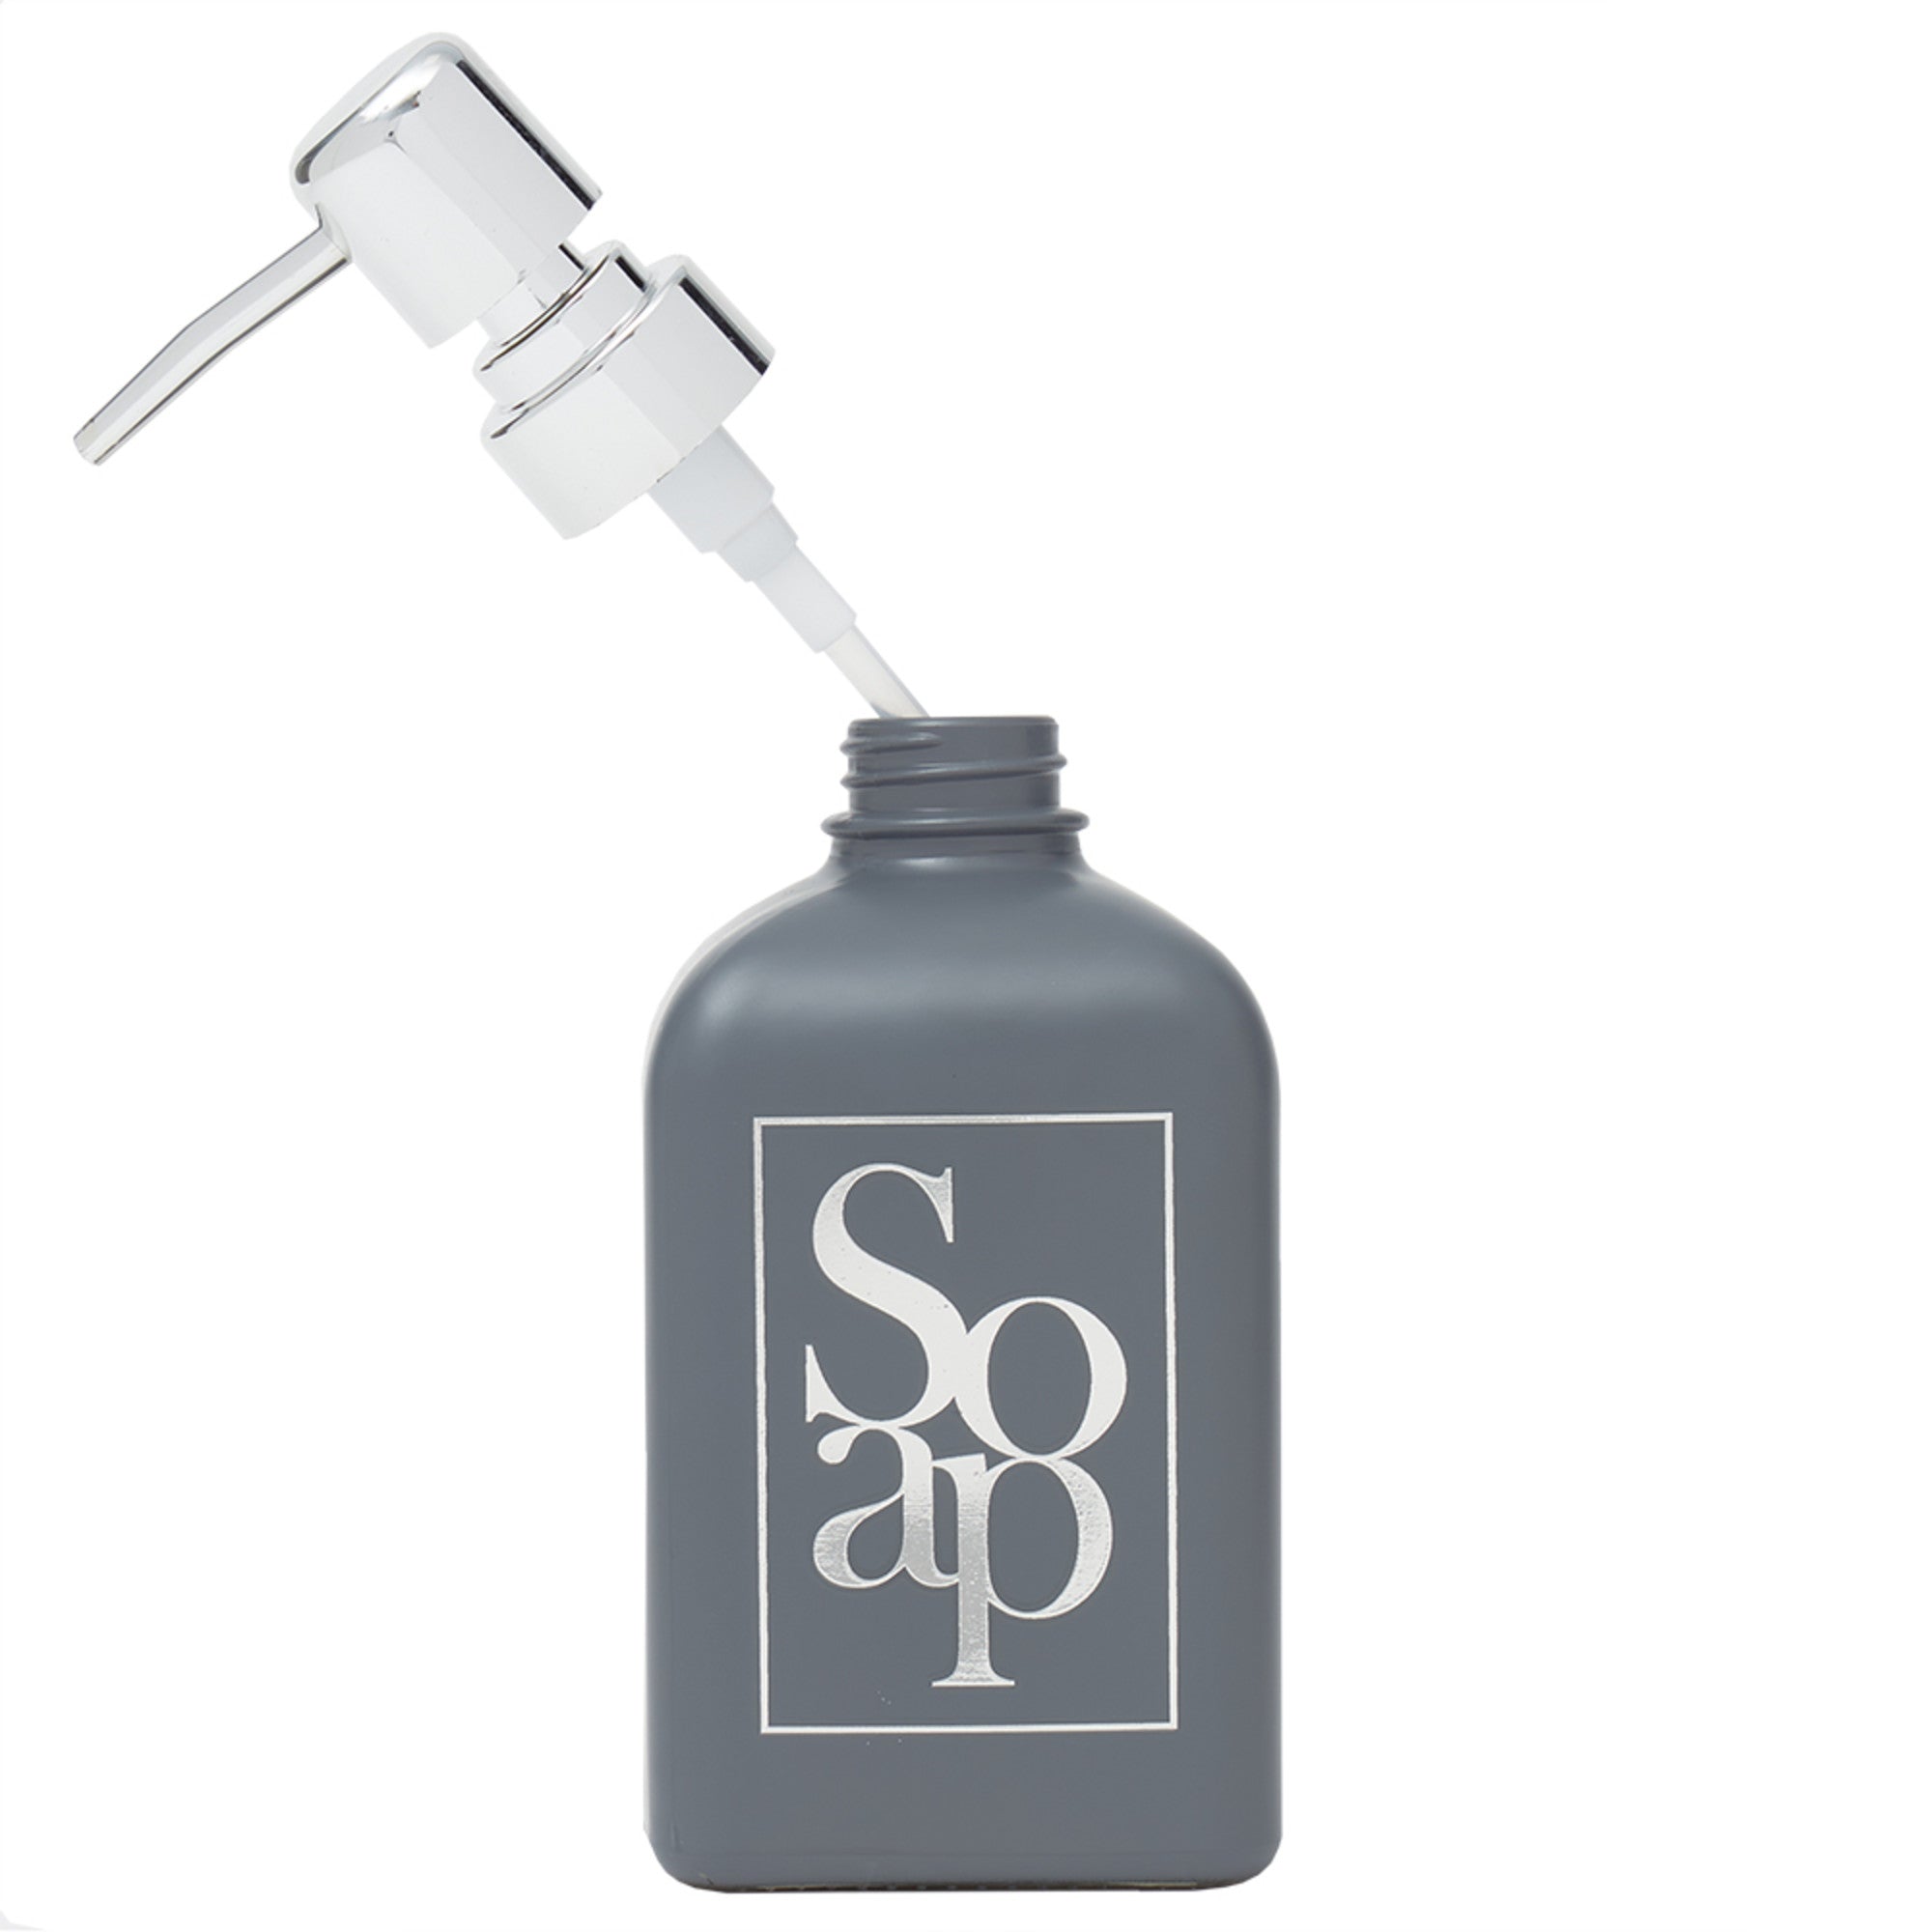 Home Basics Silver Lettering 15.2 oz Glass Soap Dispenser - Assorted Colors